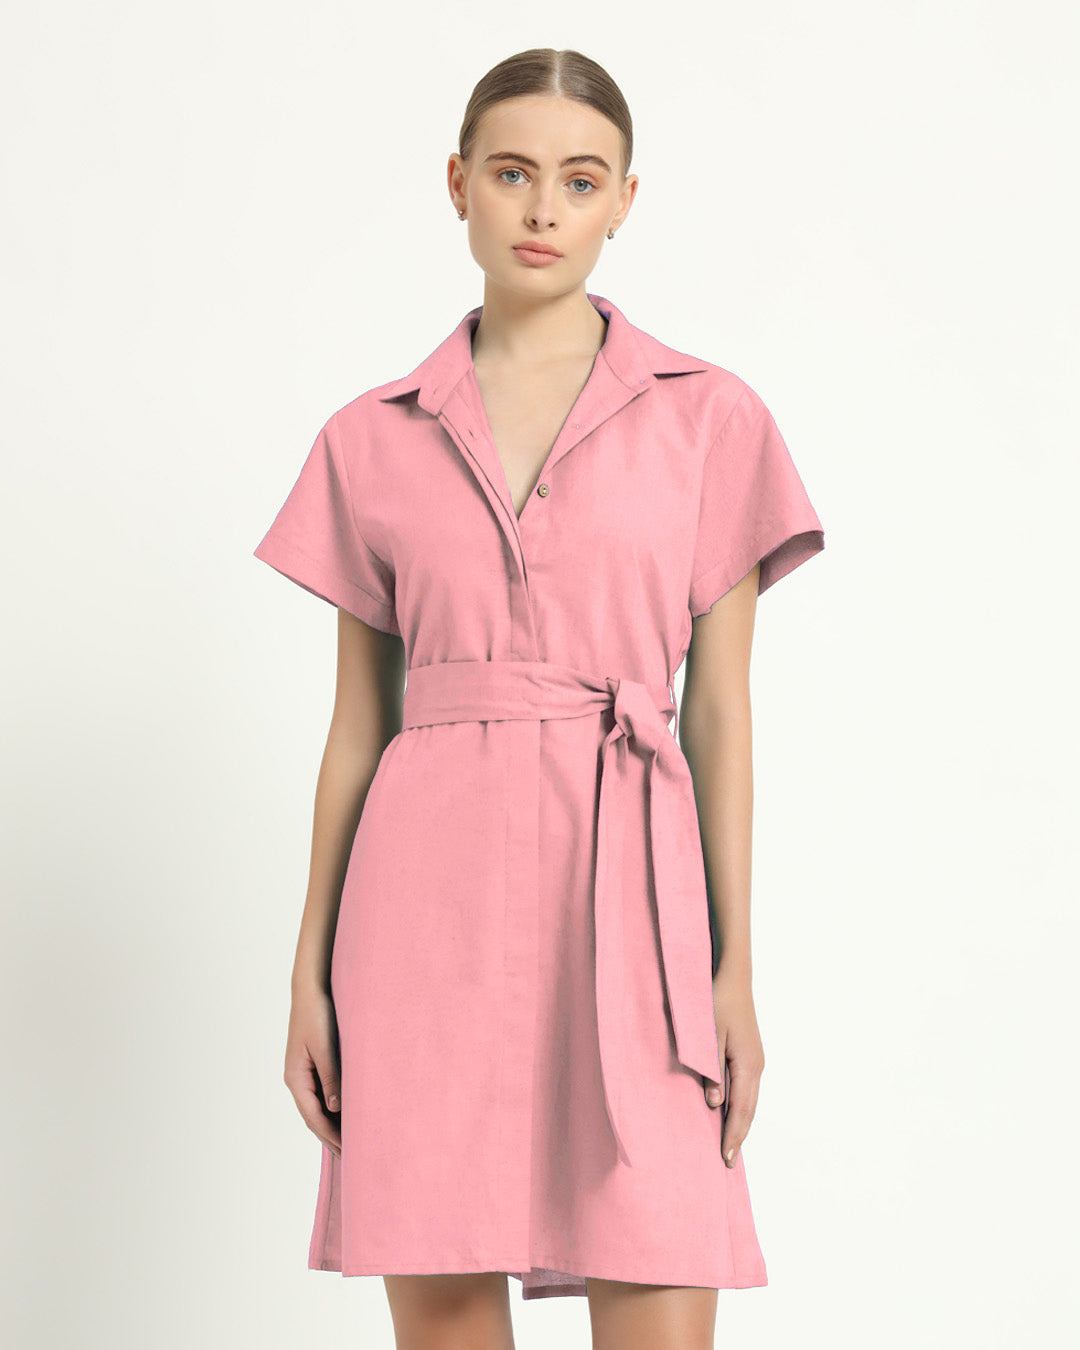 The Loretto Fondant Pink Cotton Dress